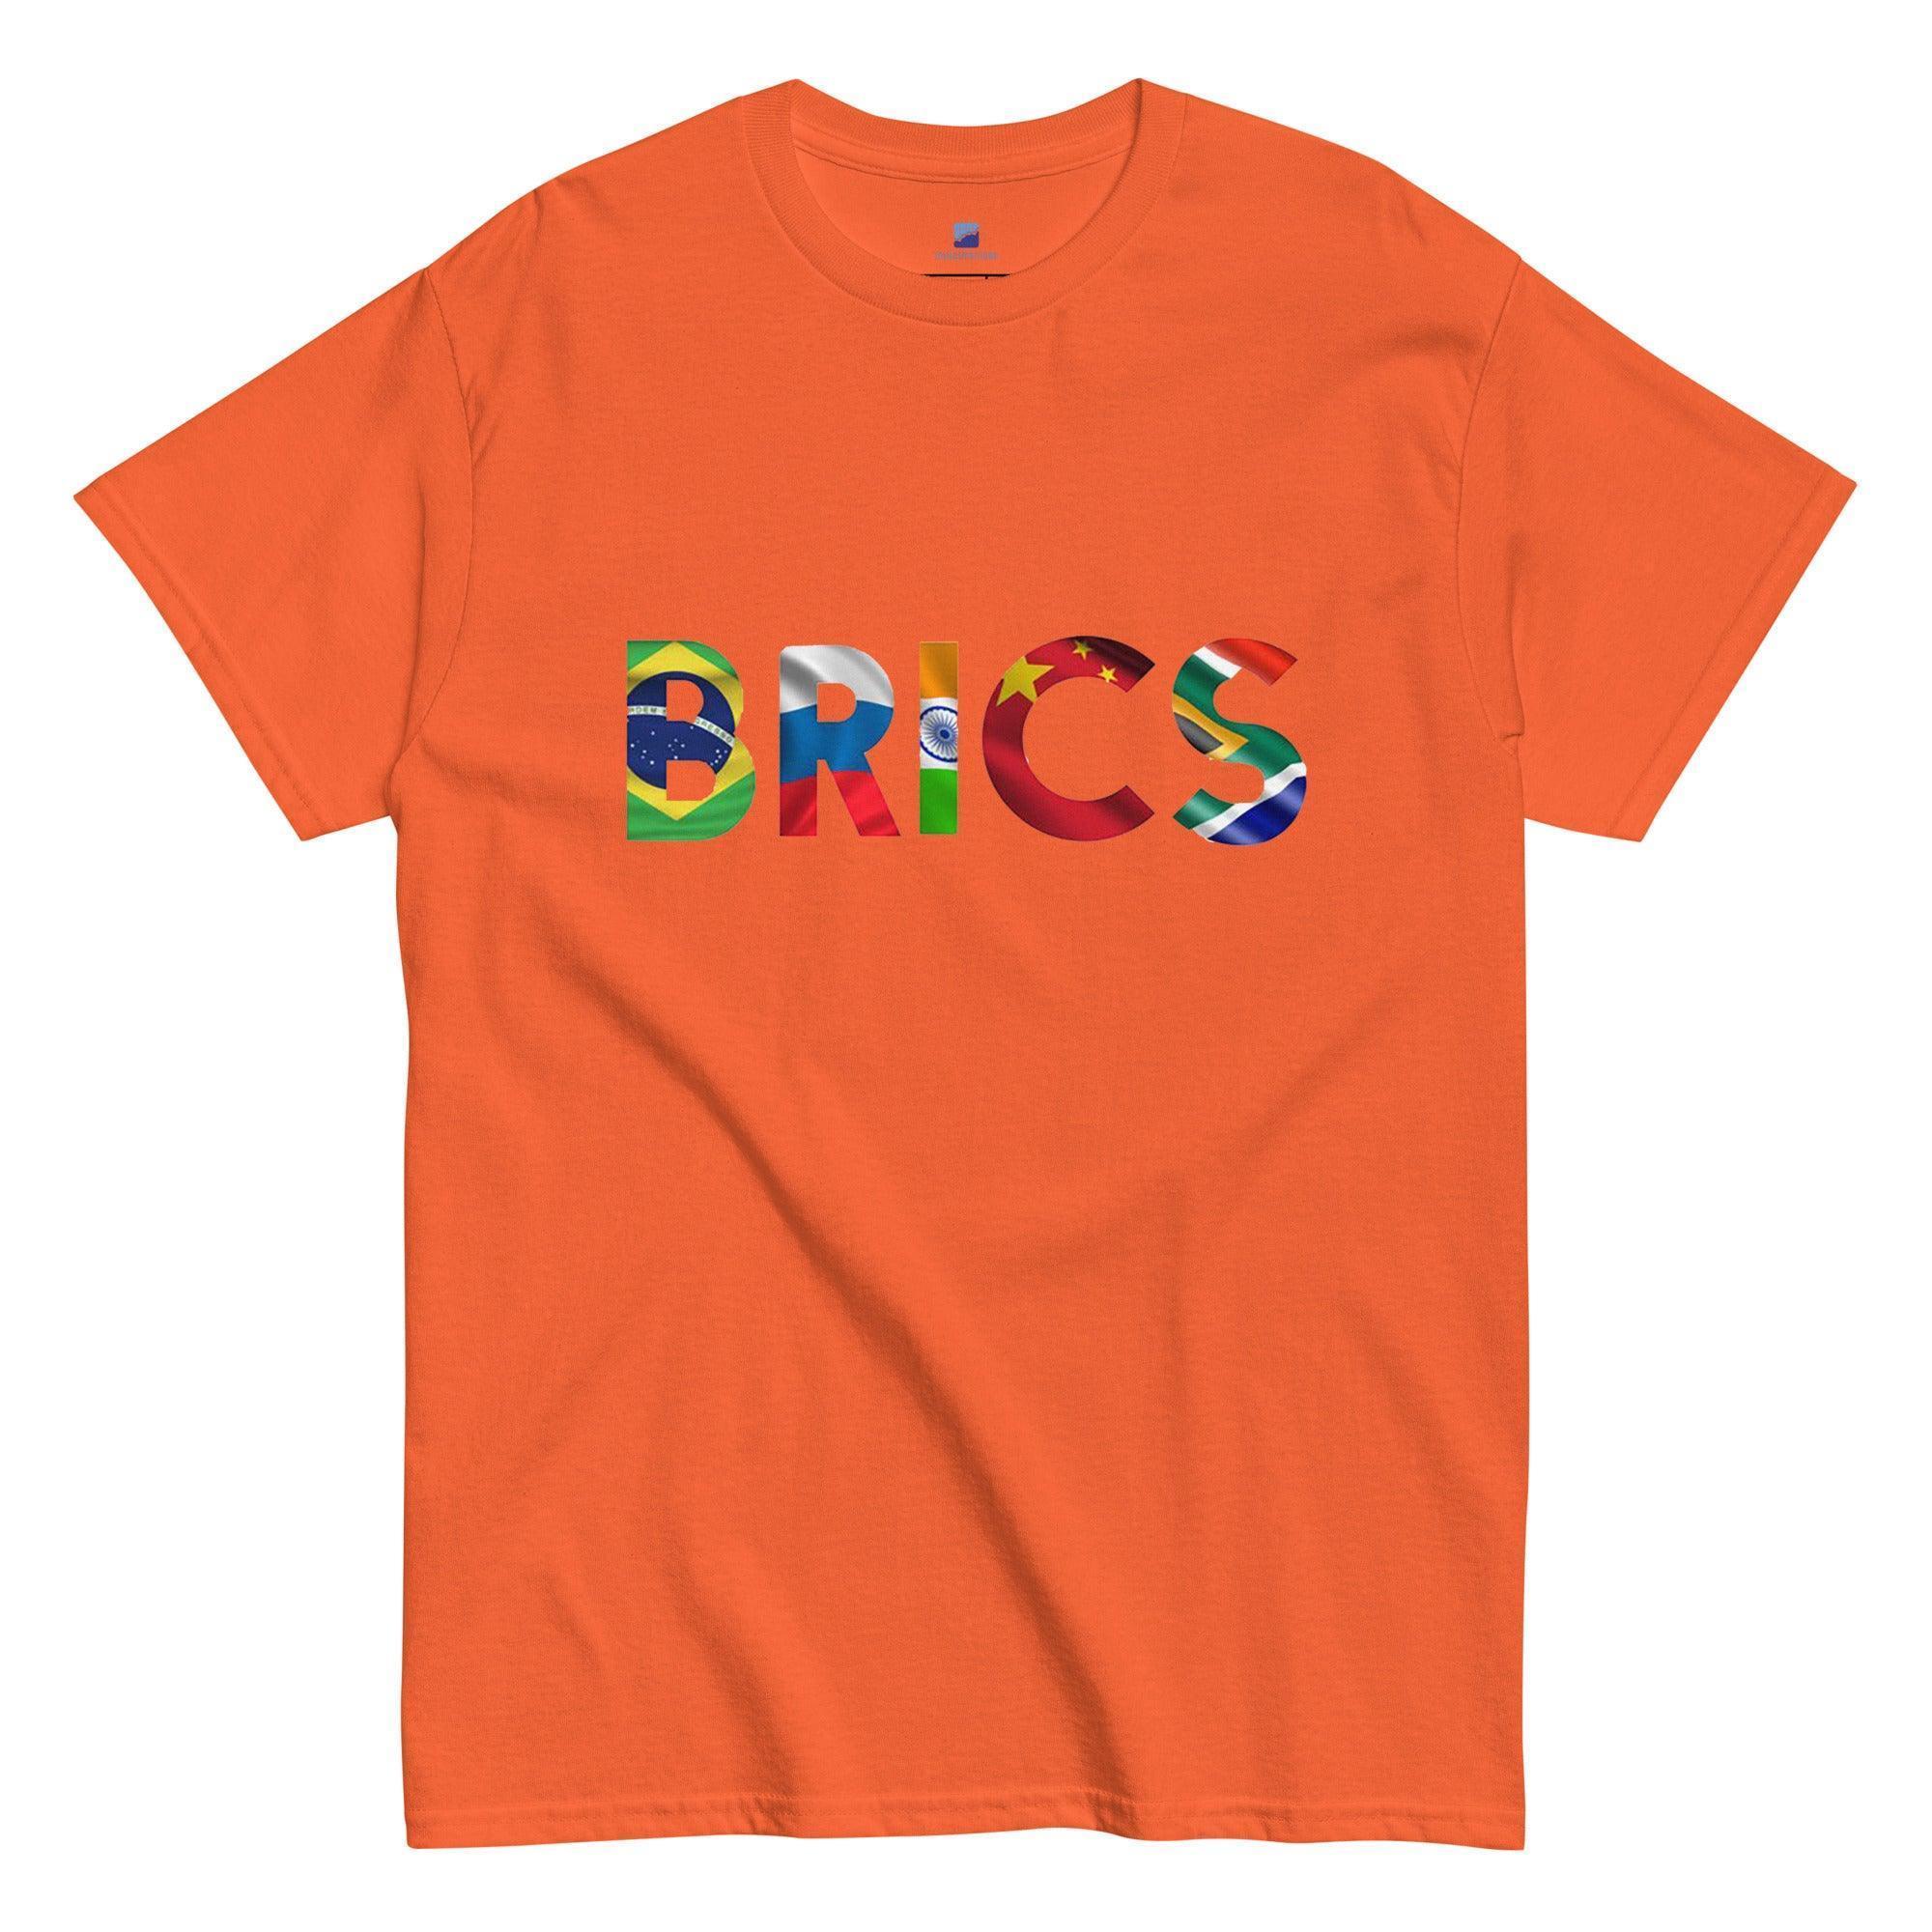 BRICS Nation T-Shirt - InvestmenTees